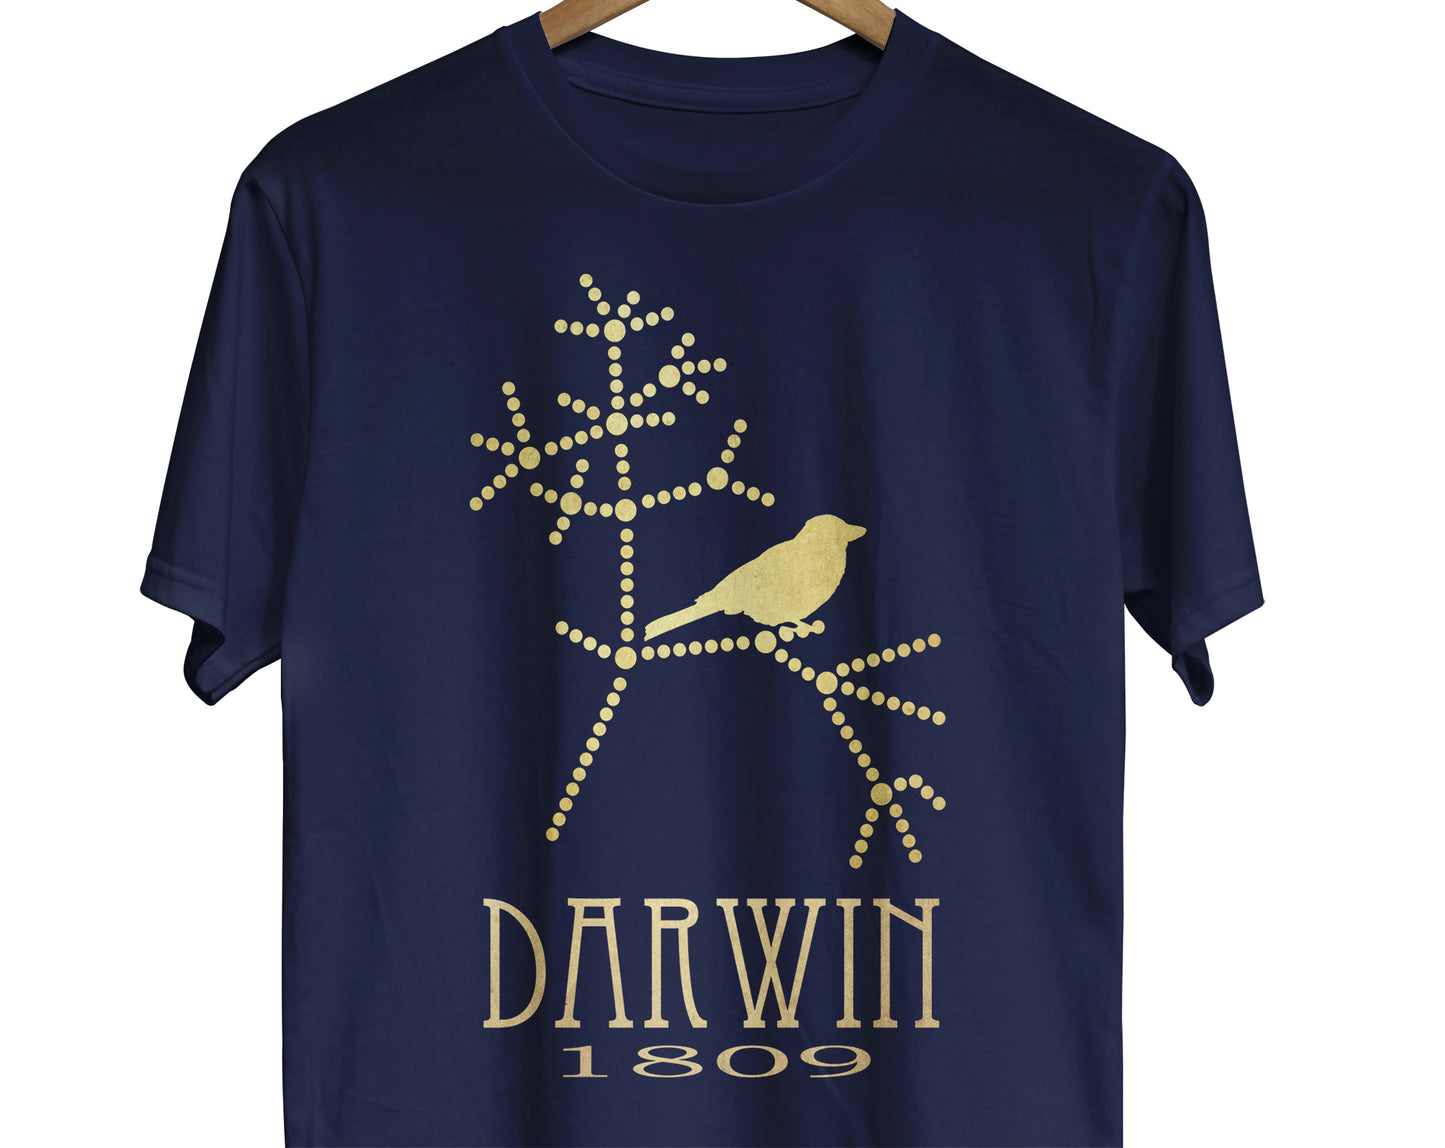 Charles Darwin evolution t-shirt for biology student or science teacher